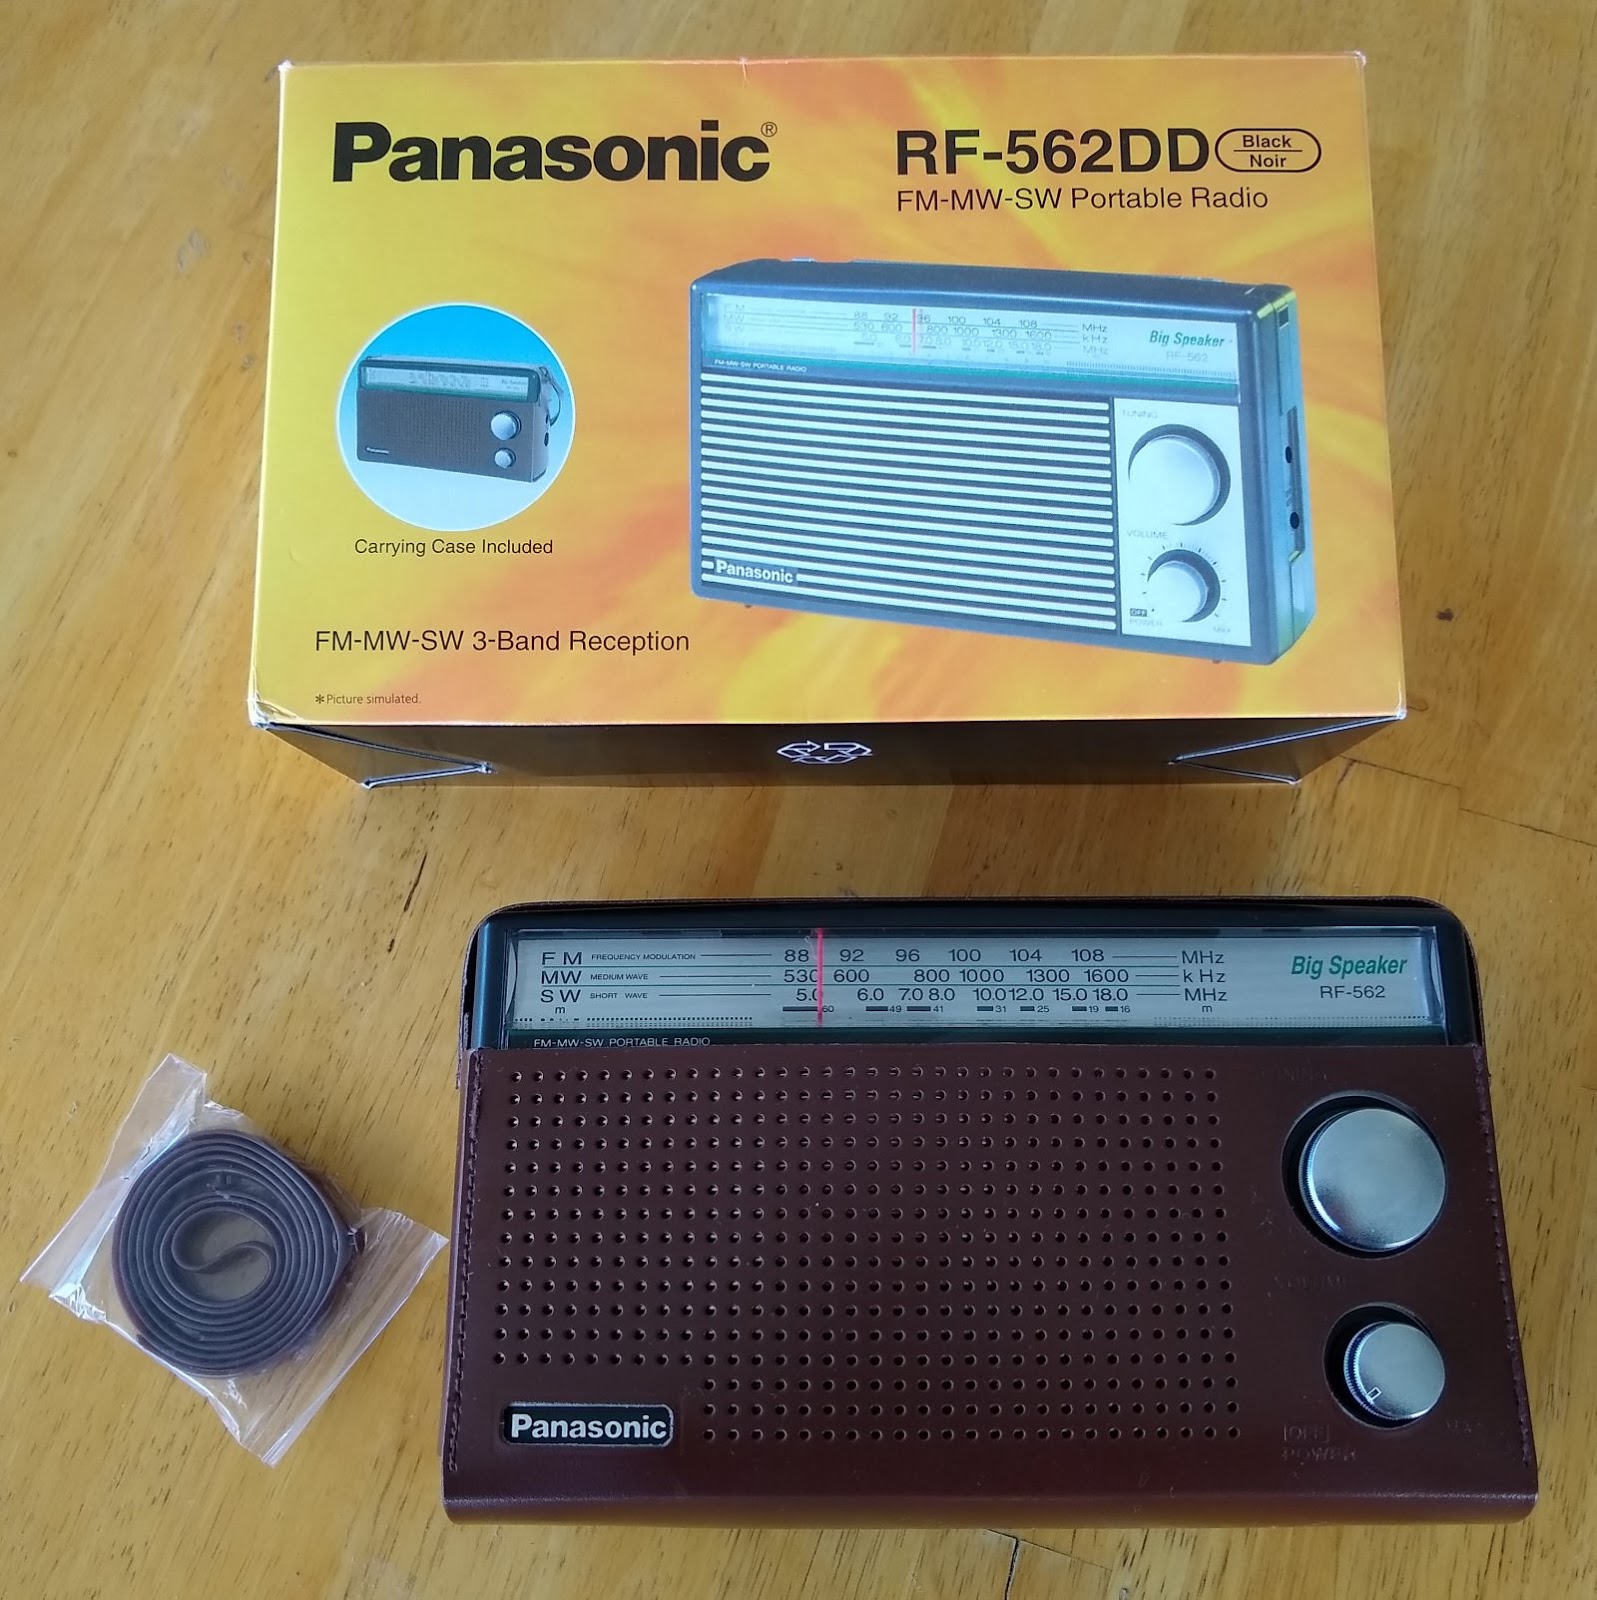 Panasonic rf 562dd2 pie safes